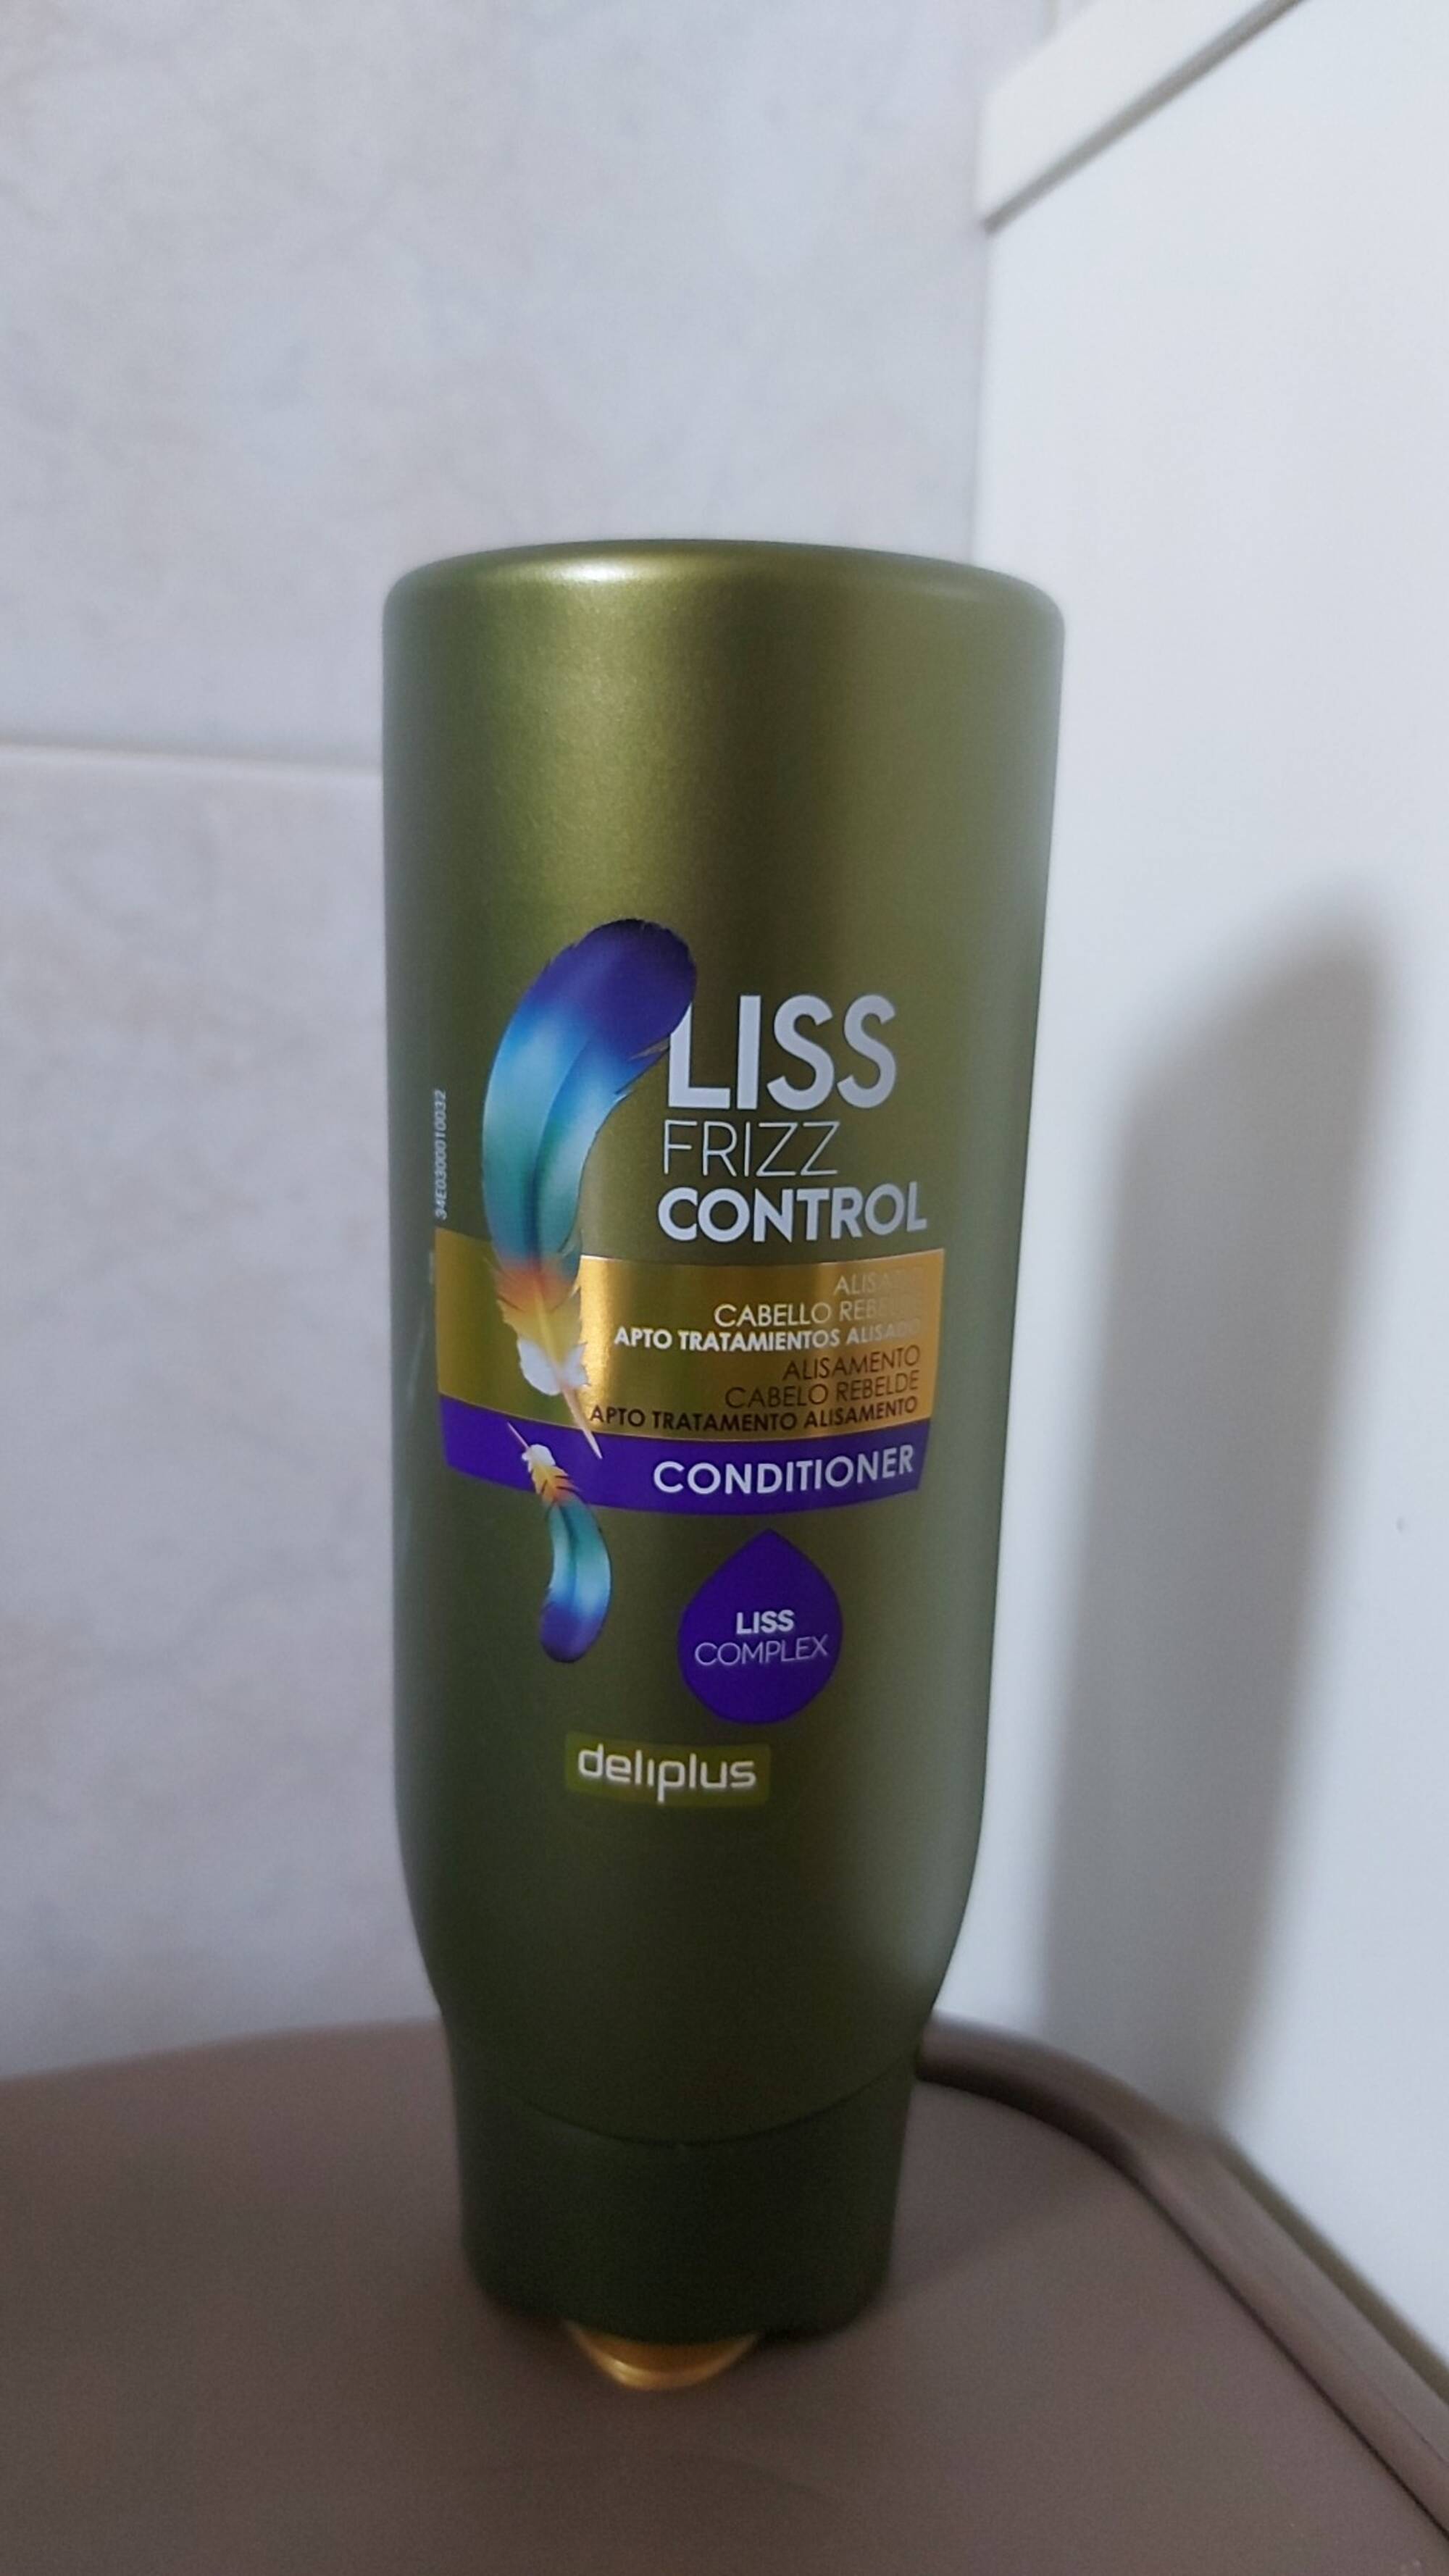 DELIPLUS - Liss frizz control - Conditioner